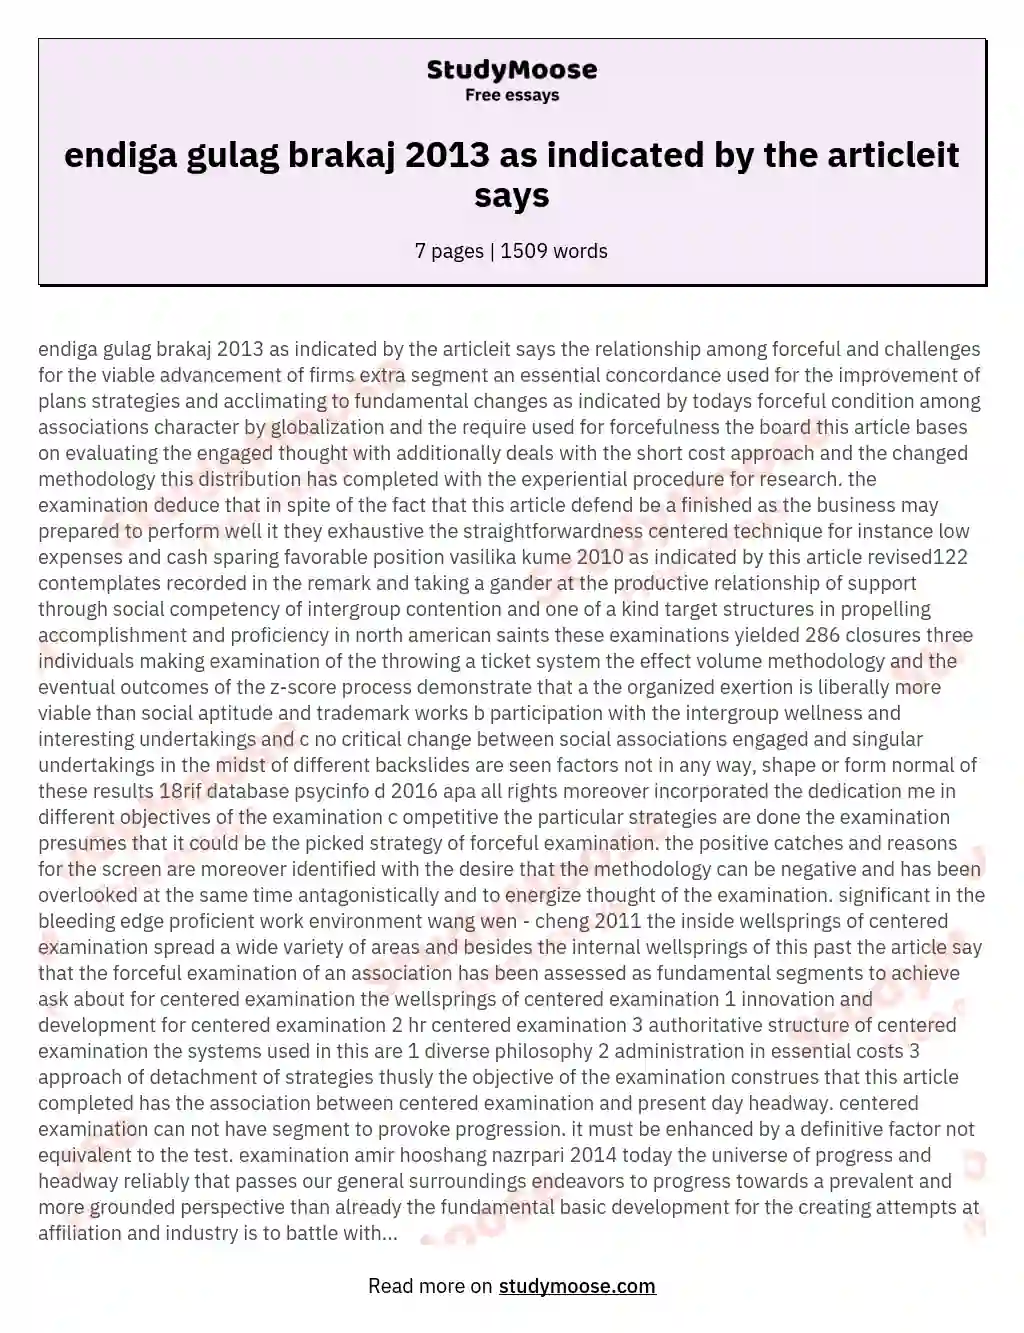 endiga gulag brakaj 2013 as indicated by the articleit says essay